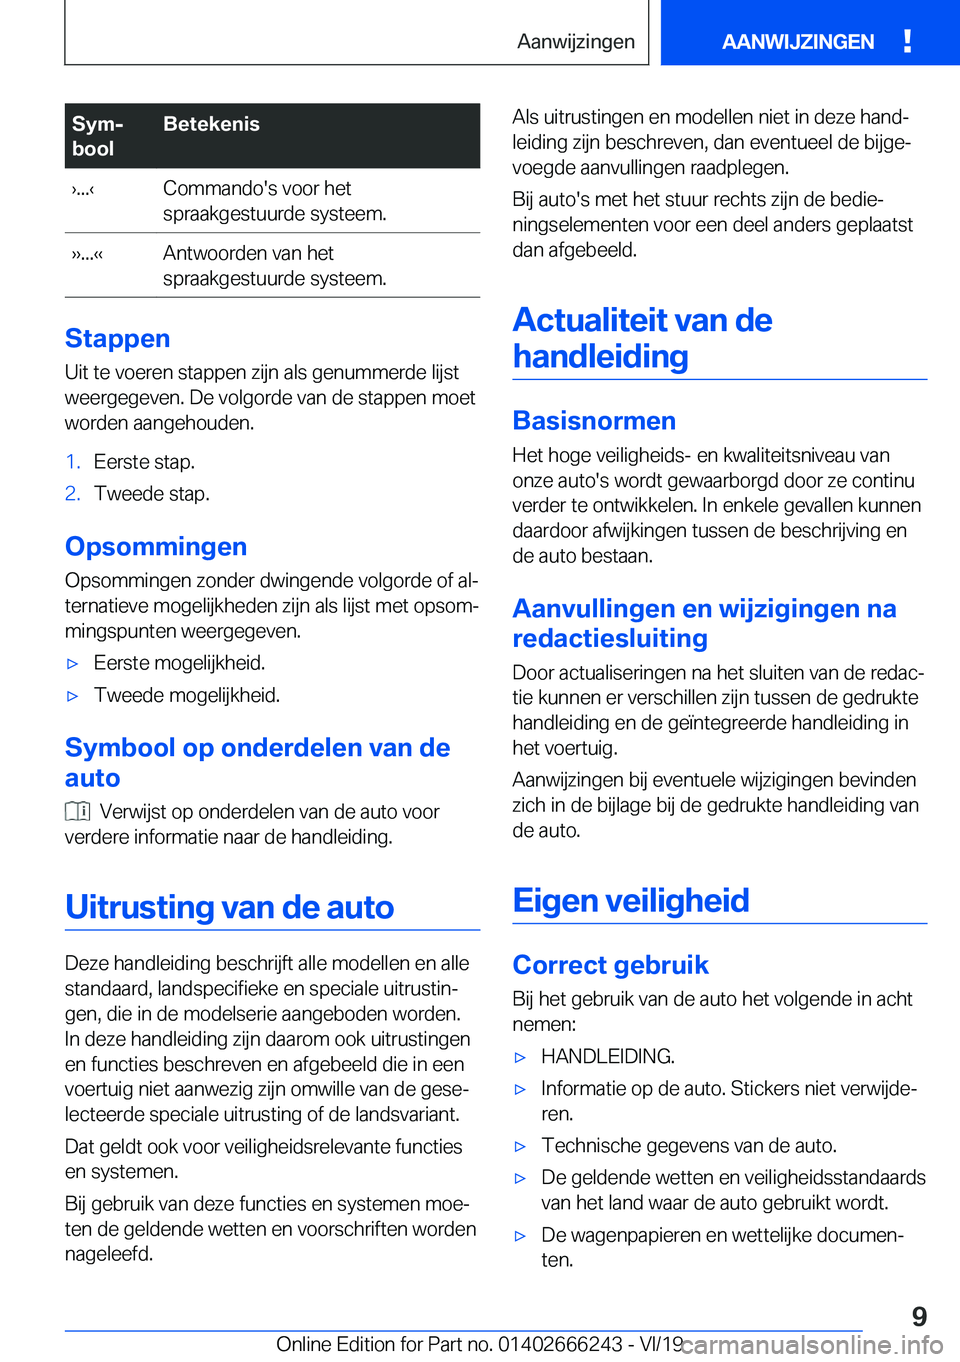 BMW 2 SERIES COUPE 2020  Instructieboekjes (in Dutch) �S�y�mj
�b�o�o�l�B�e�t�e�k�e�n�i�s